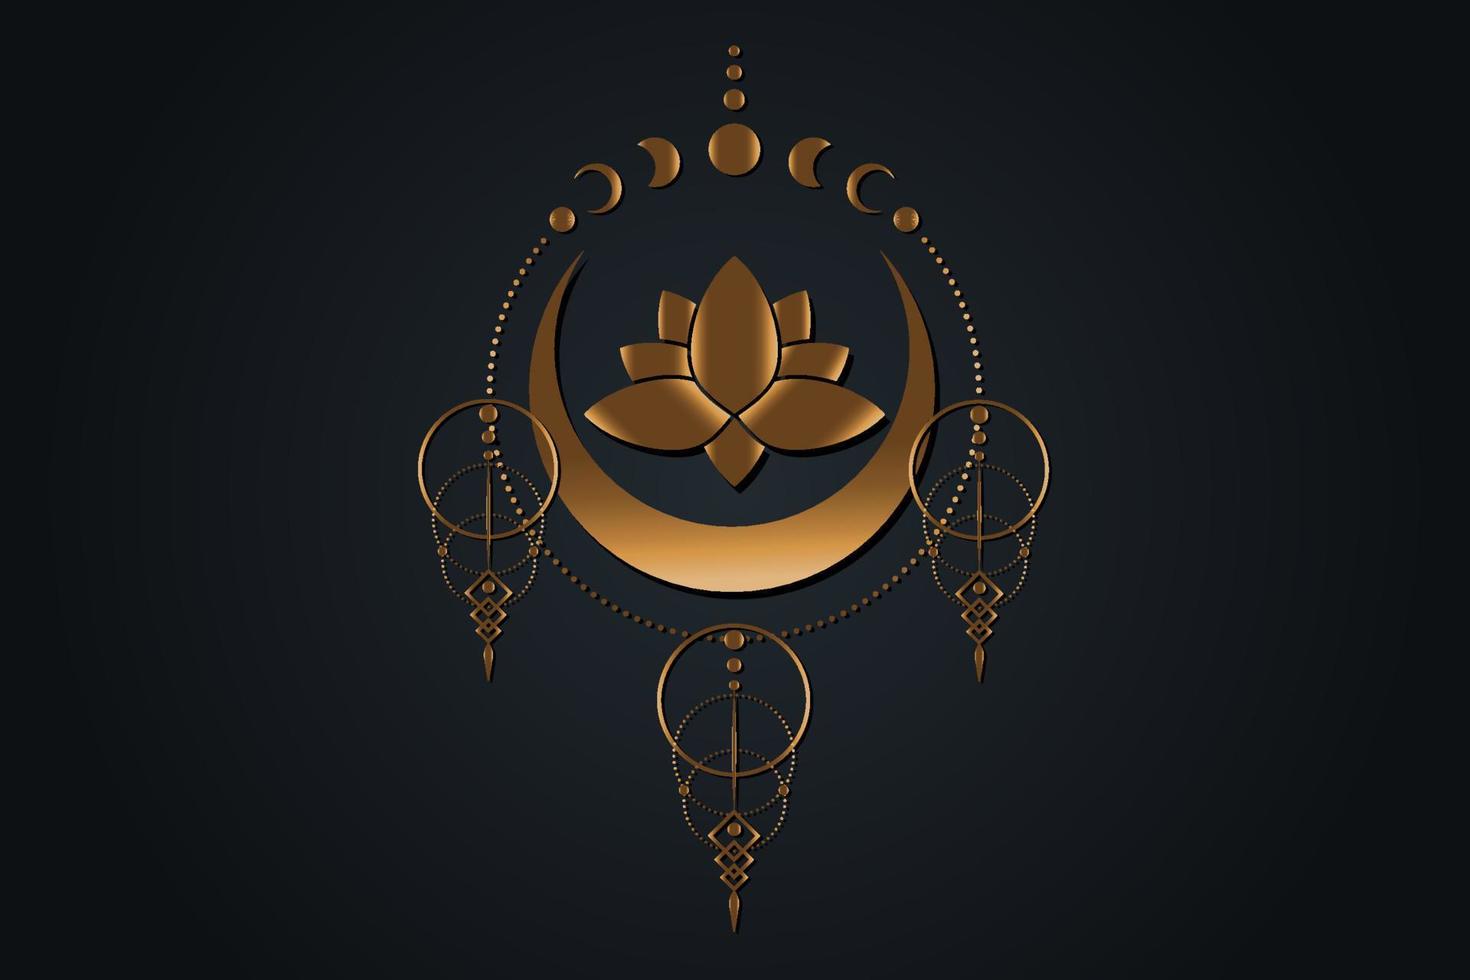 guld lotusblomma och måne, helig geometri, halvmåne hednisk wiccan gudinna symbol. månfaser gamla gyllene wicca banner tecken, energi cirkel, boho stil vektor isolerad på svart bakgrund